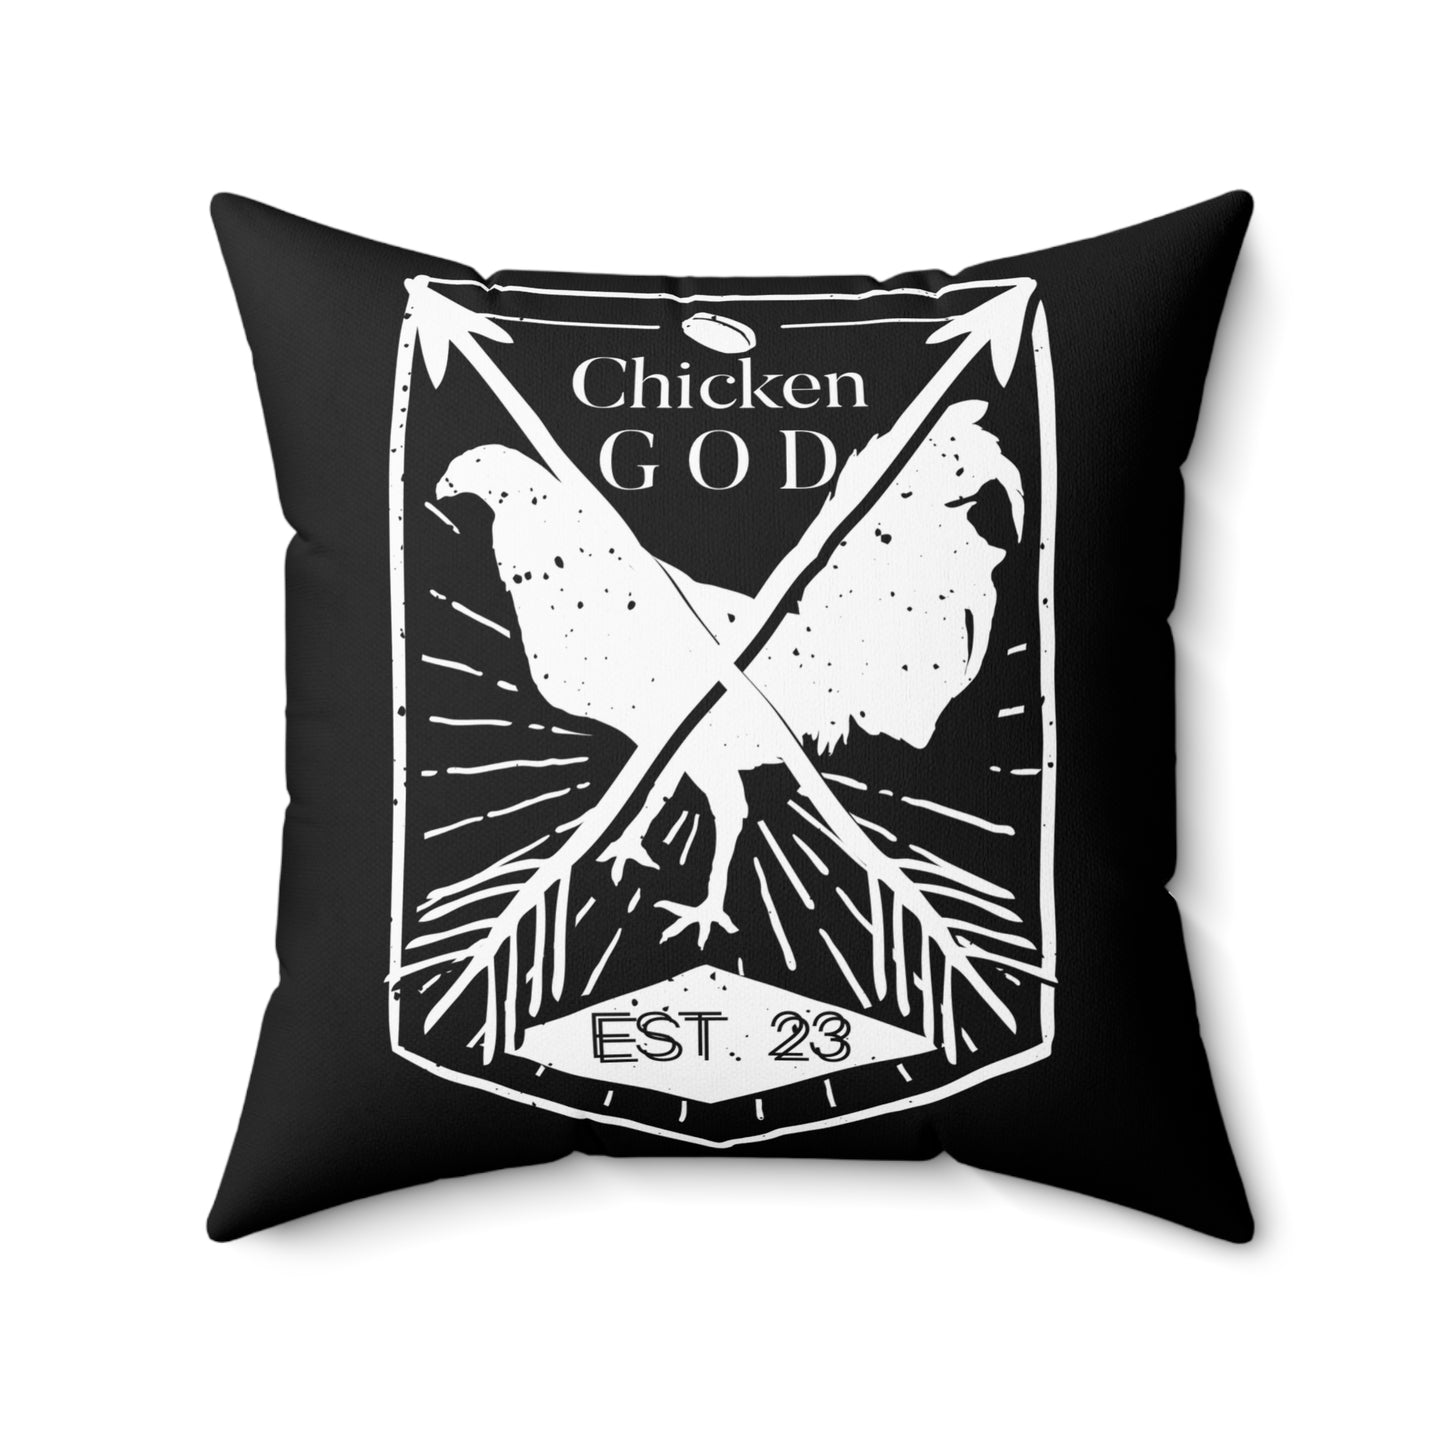 Chicken GOD Spun Polyester Square Pillow